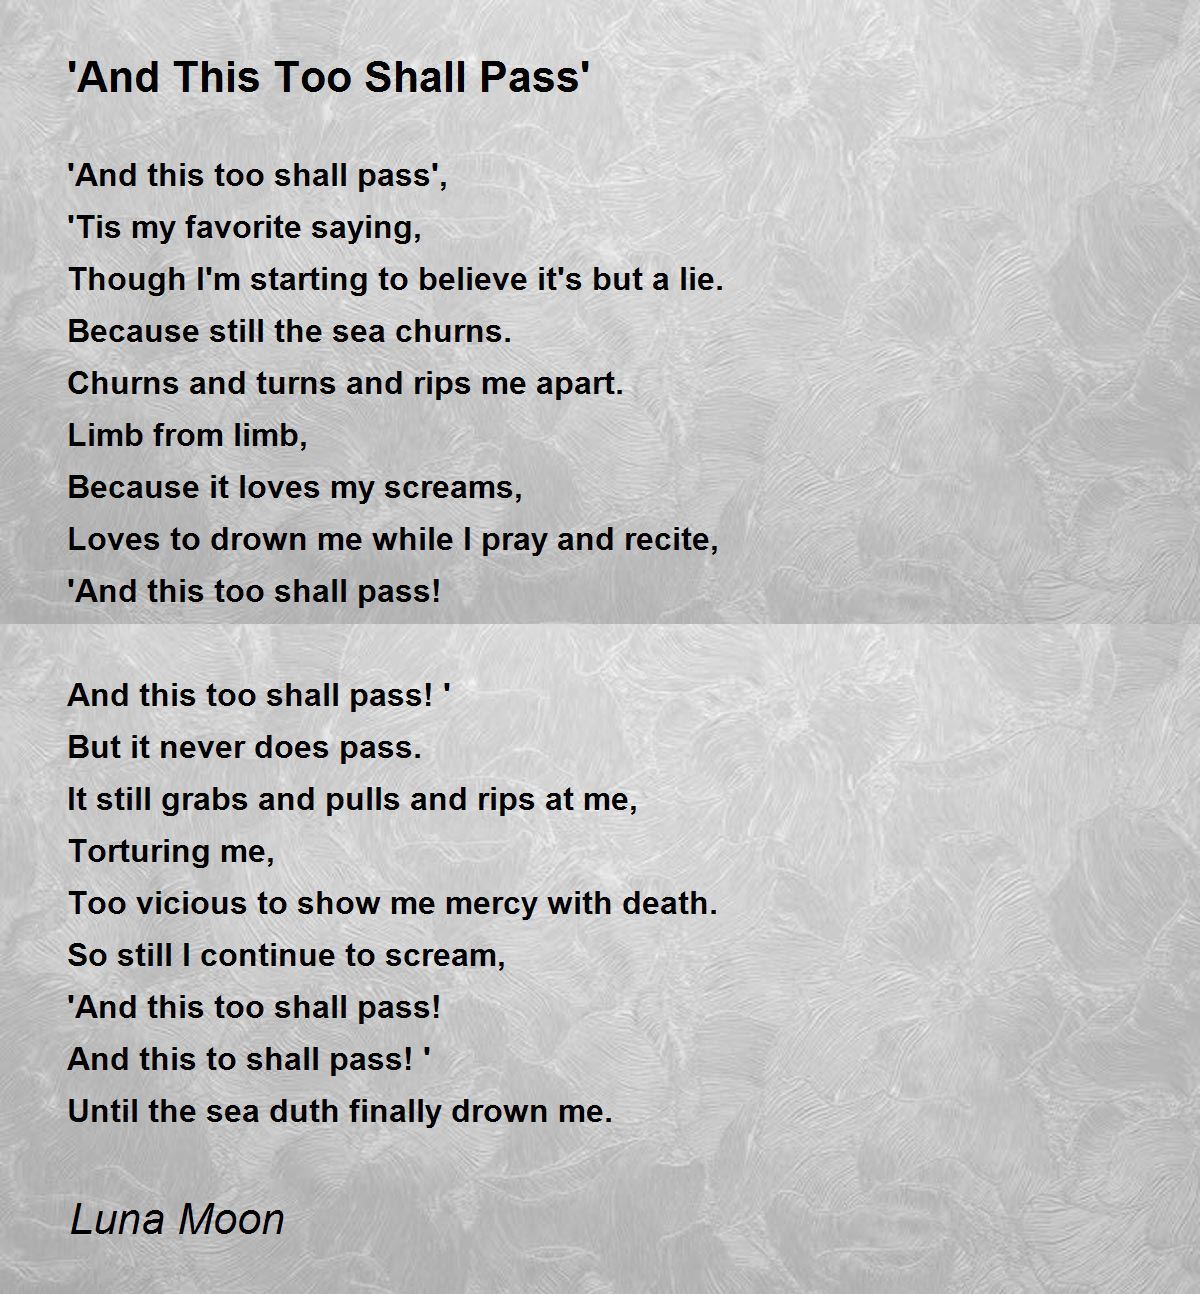 And This Too Shall Pass' - 'And This Too Shall Pass' Poem by Luna Moon